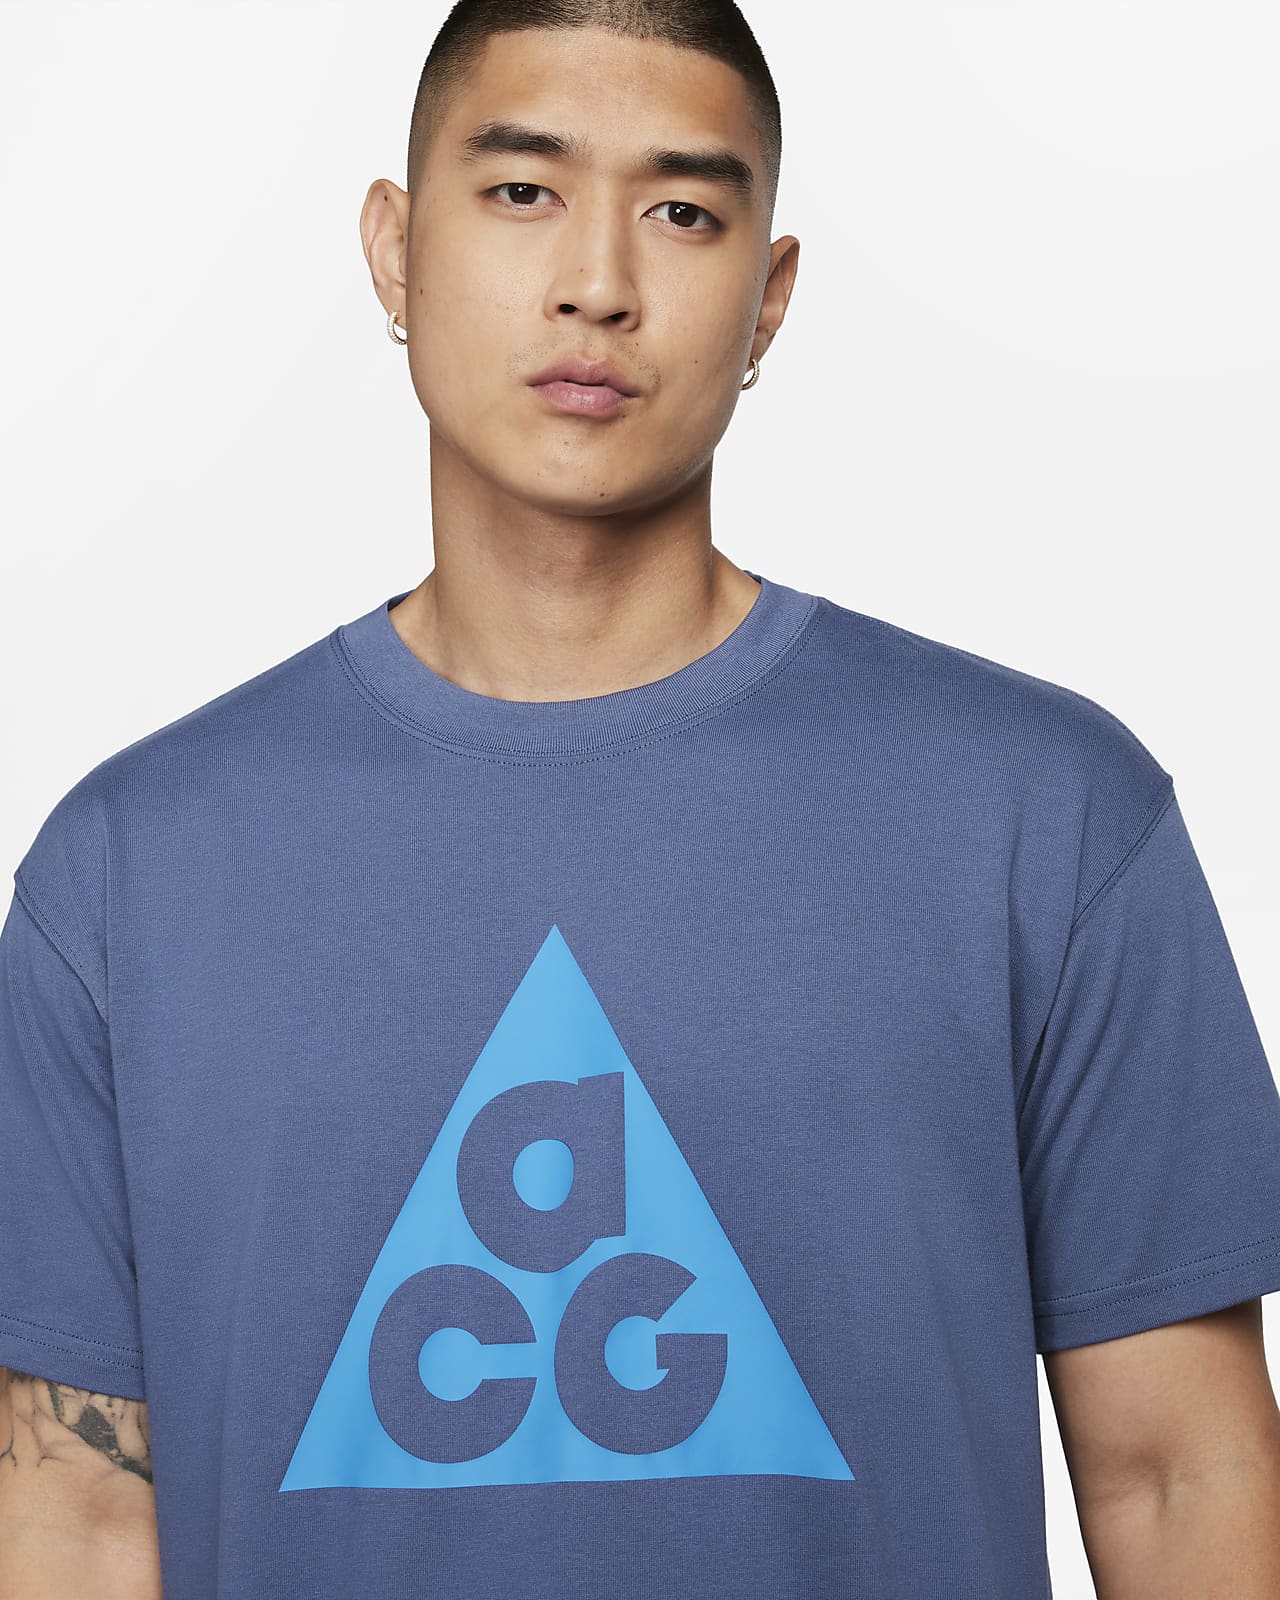 【新品未使用】NIKE acg small logo T-shirt(XXL)